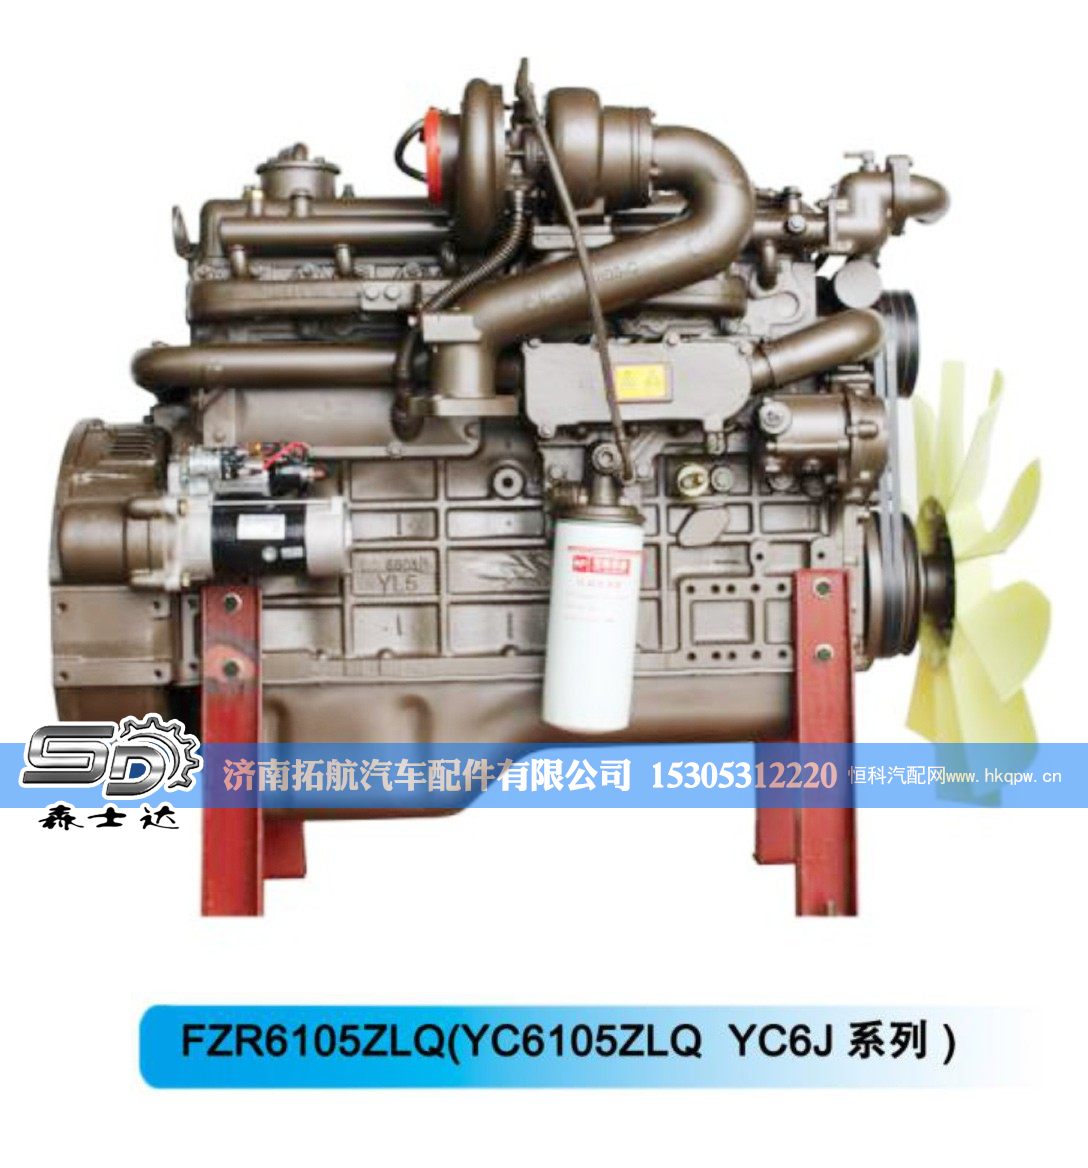 (YC6105ZLQ YC6J系列）与玉柴发动机完全通用/FZR6105ZLQ(YC6105ZLQ YC6J系列）